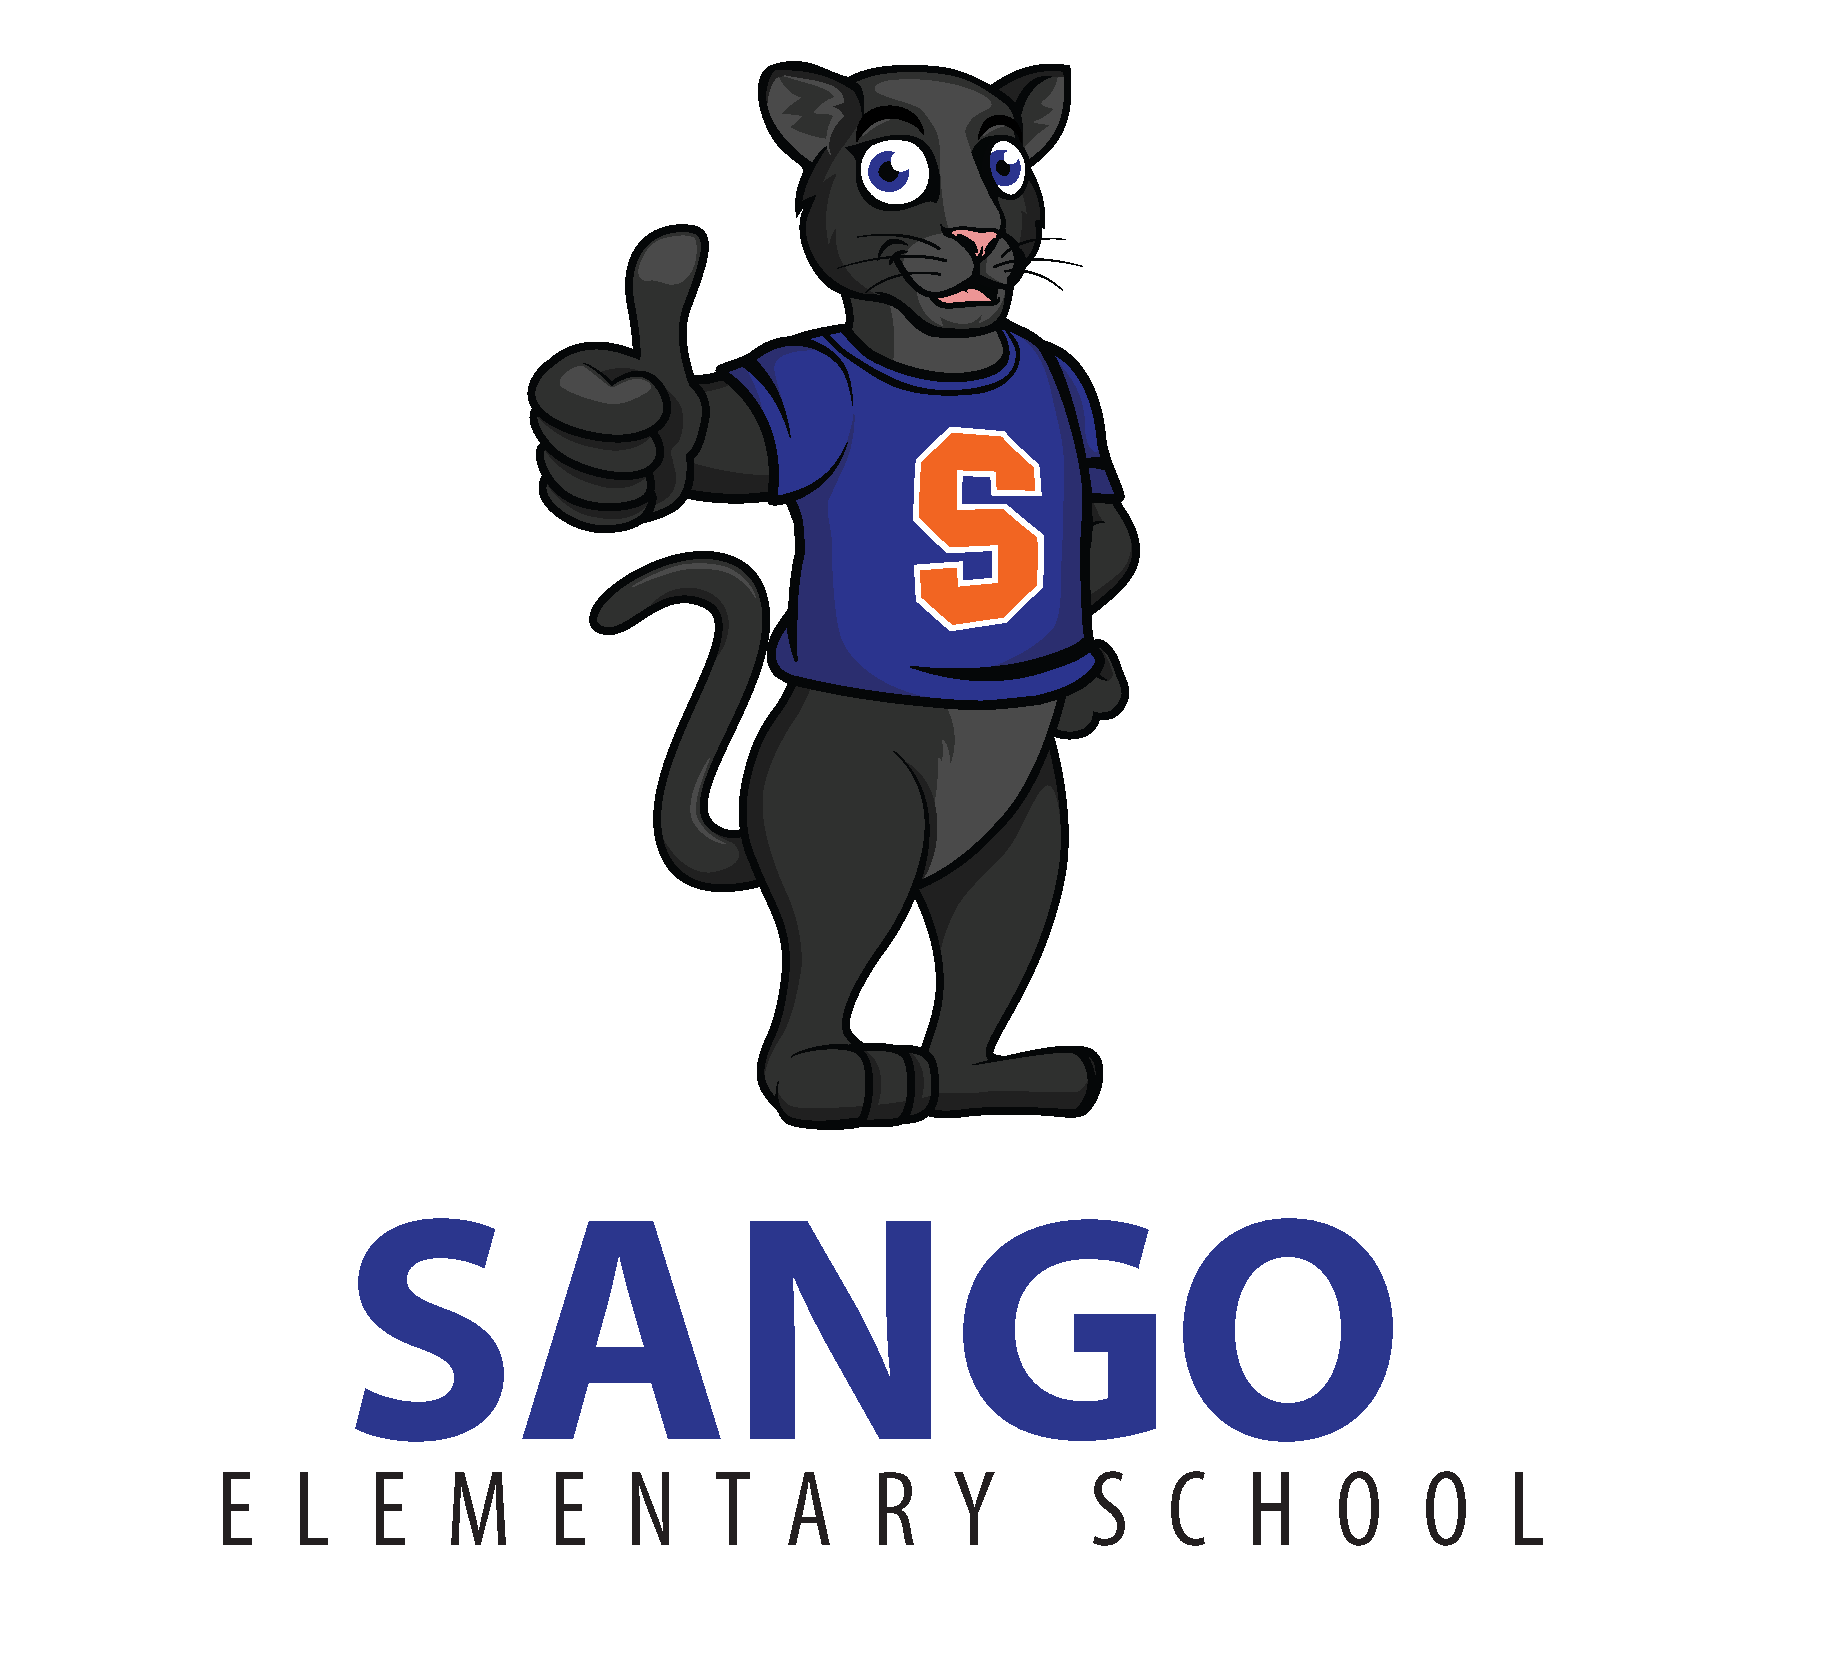 sango elementary school logo